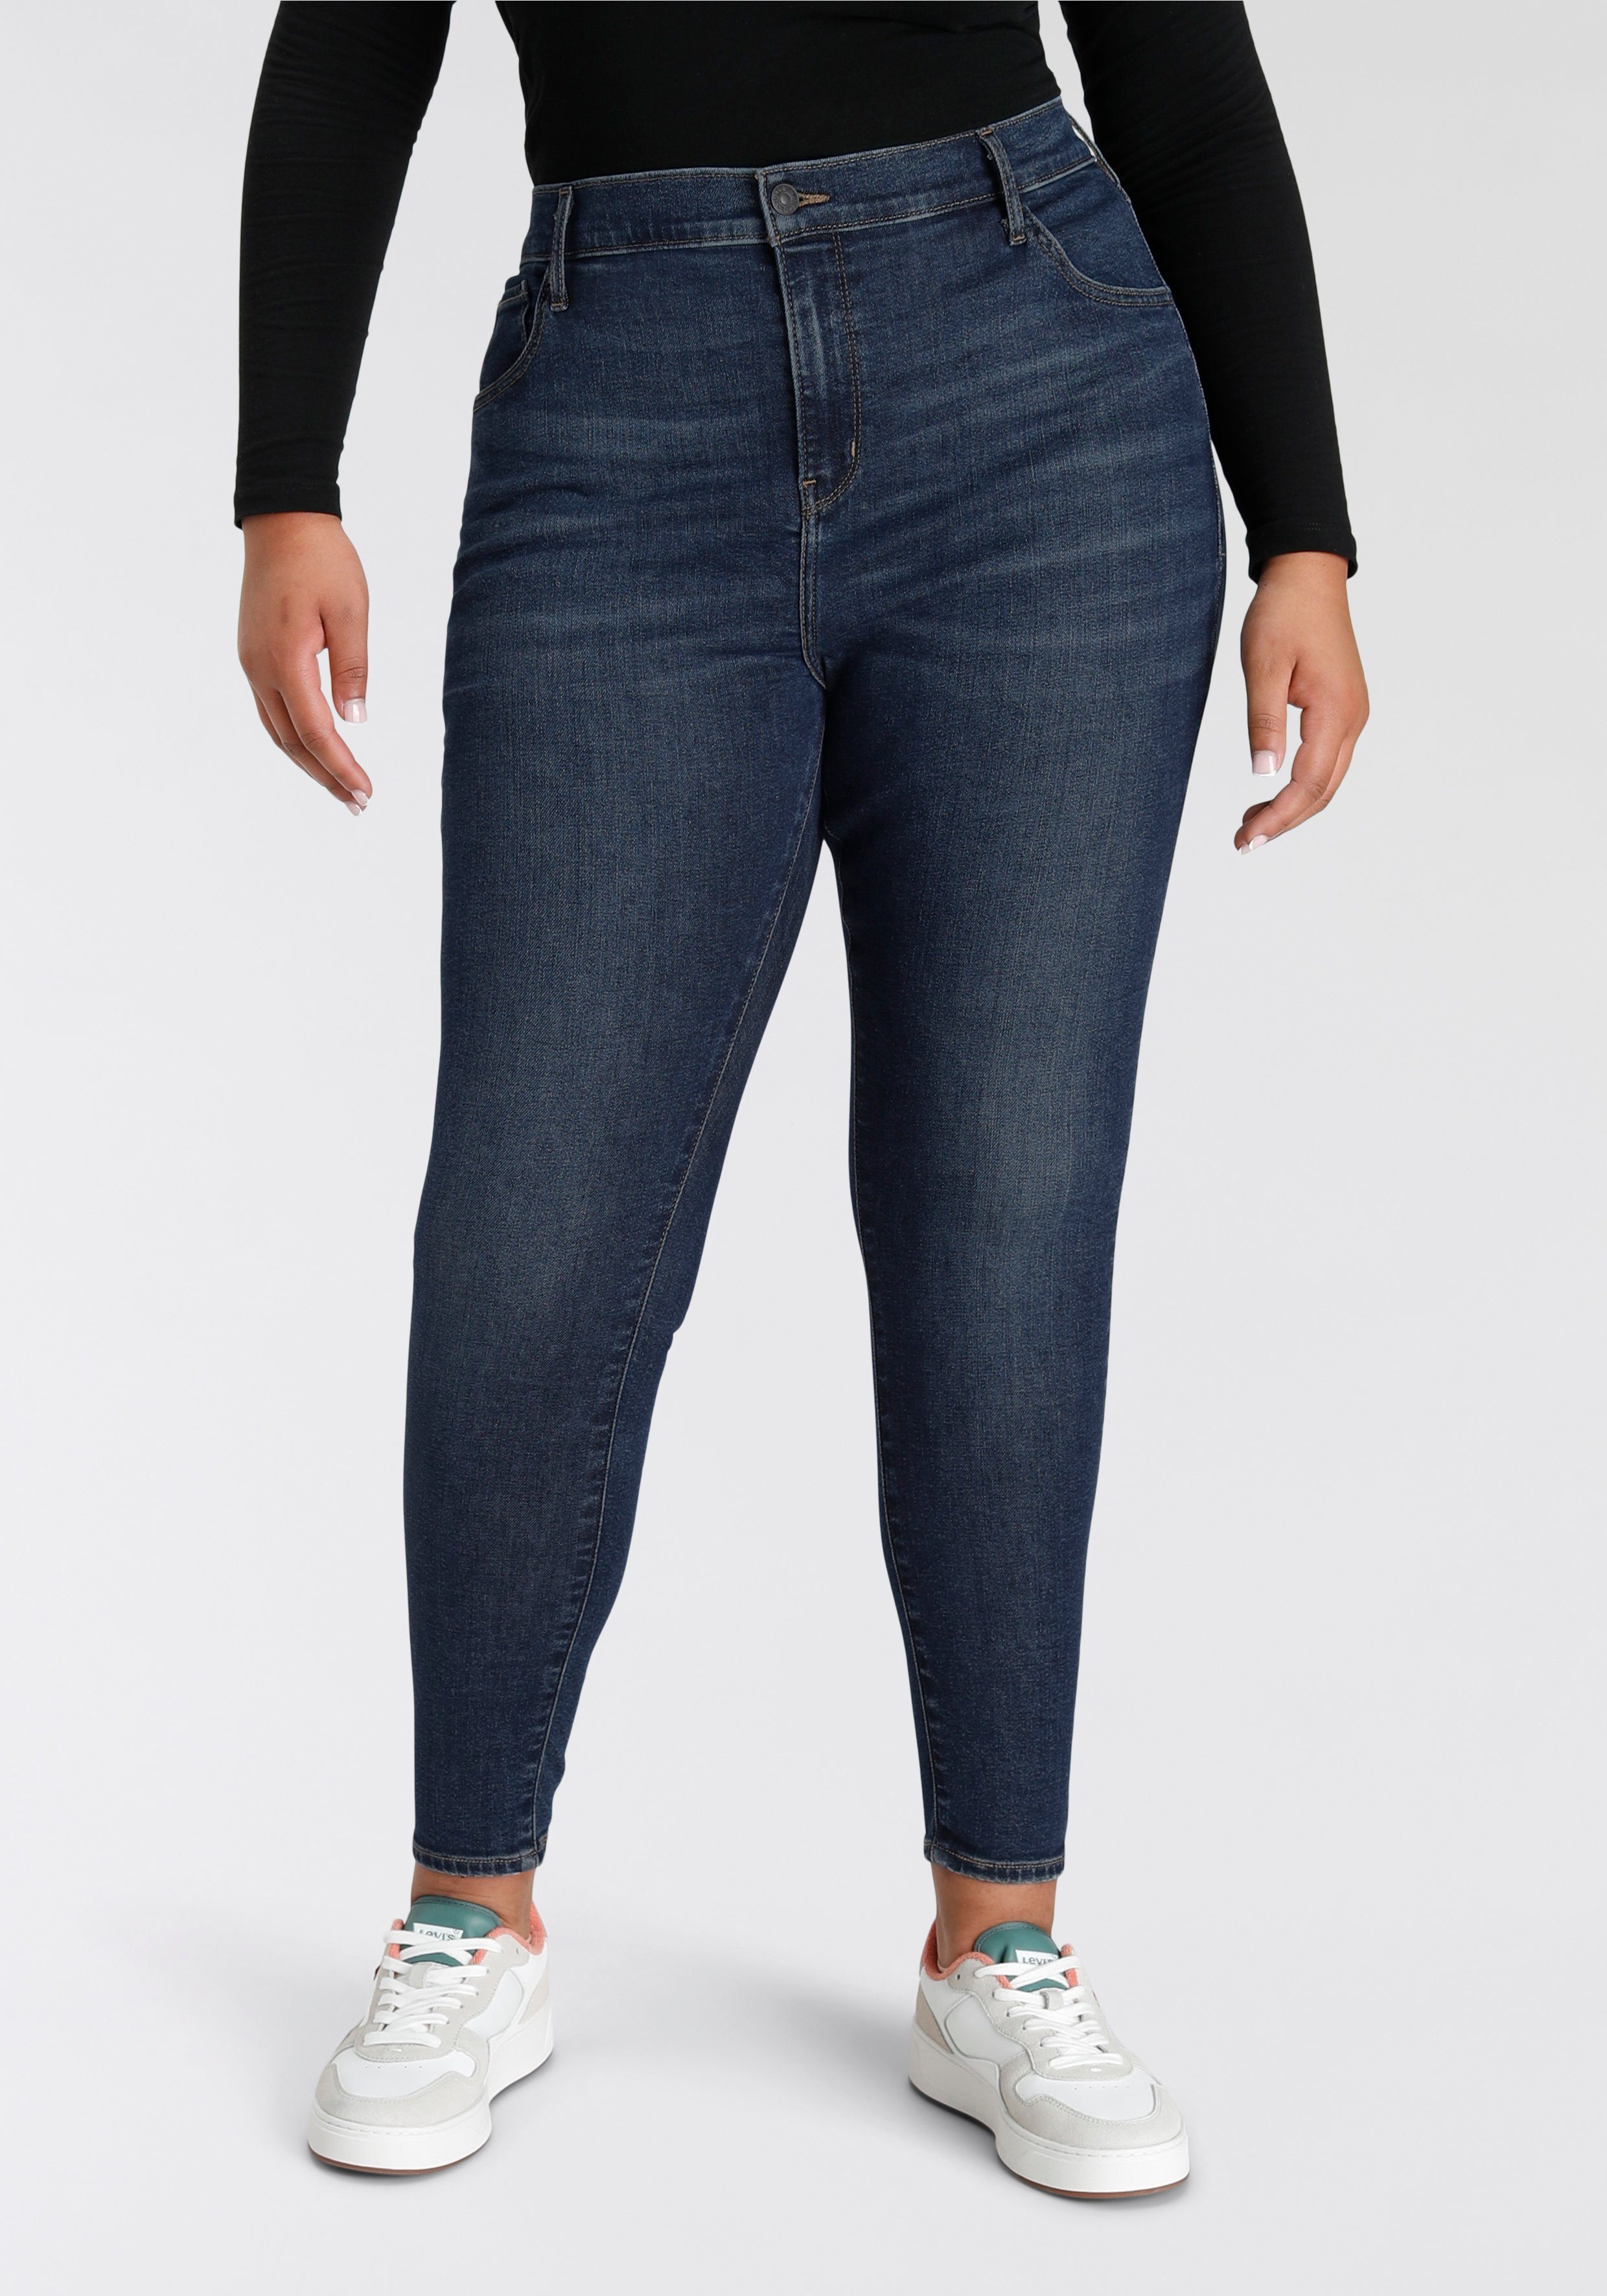 Leibhöhe High-Rise dark Plus mit 720 Levi's® indigo hoher Skinny-fit-Jeans